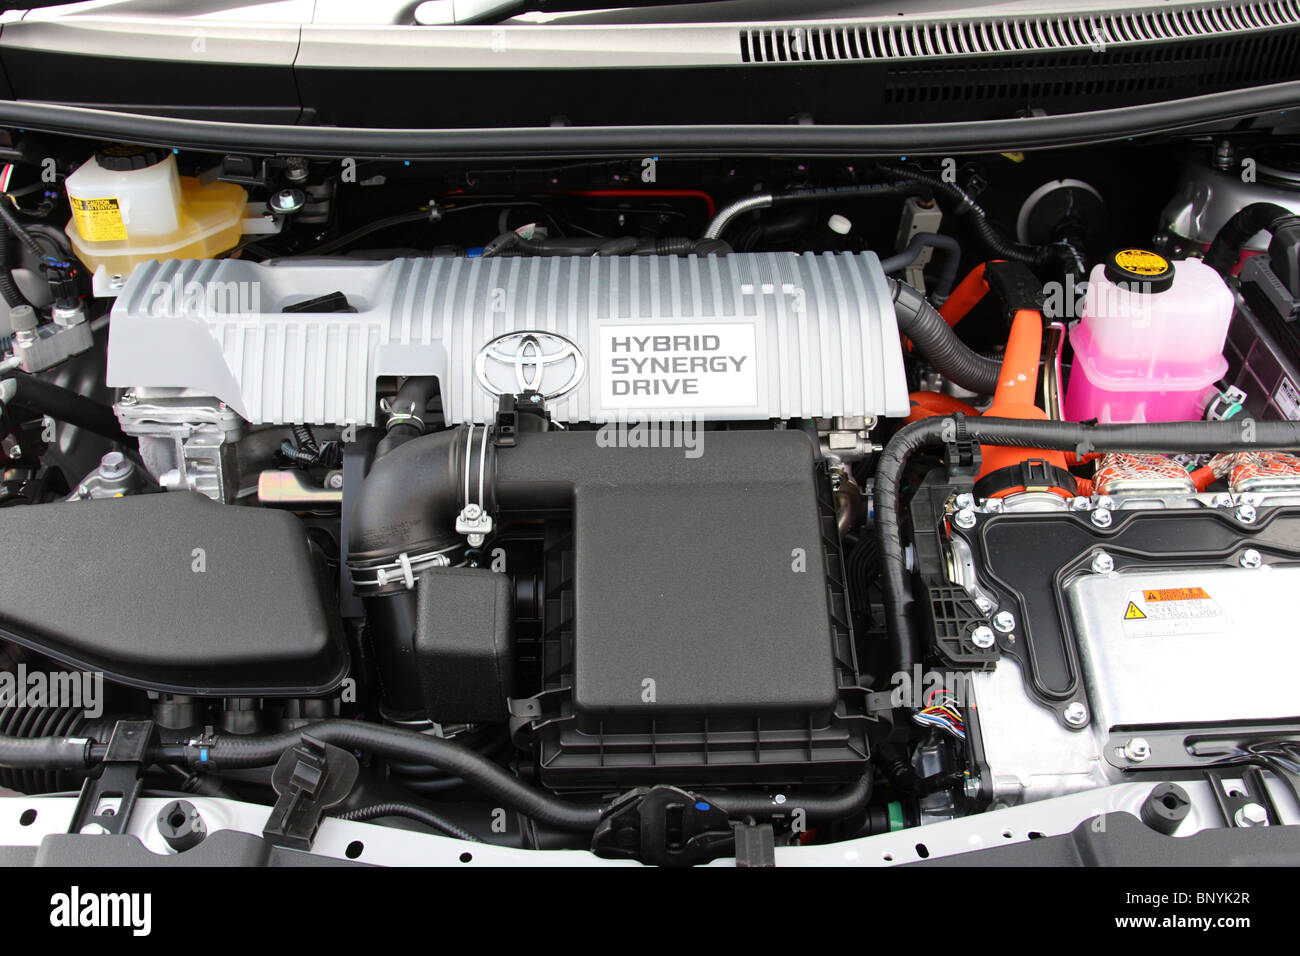 A Toyota hybrid engine. Stock Photo